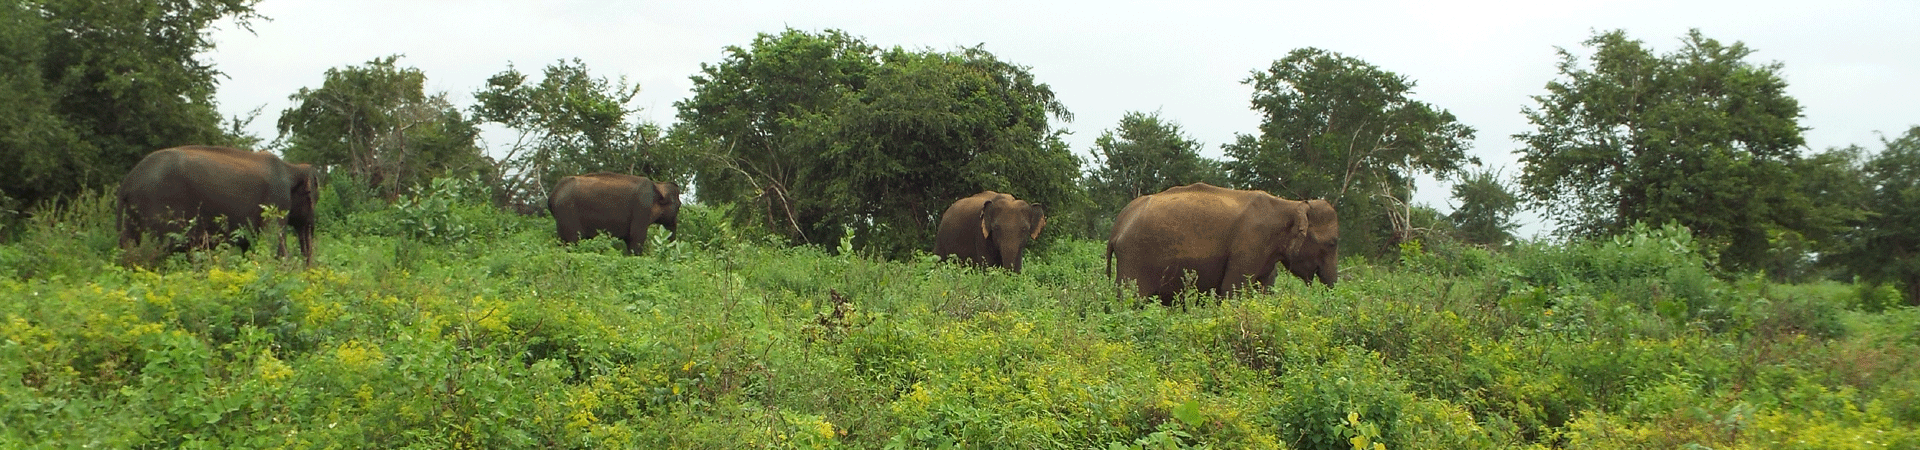 Wald mit frei lebende Elefanten